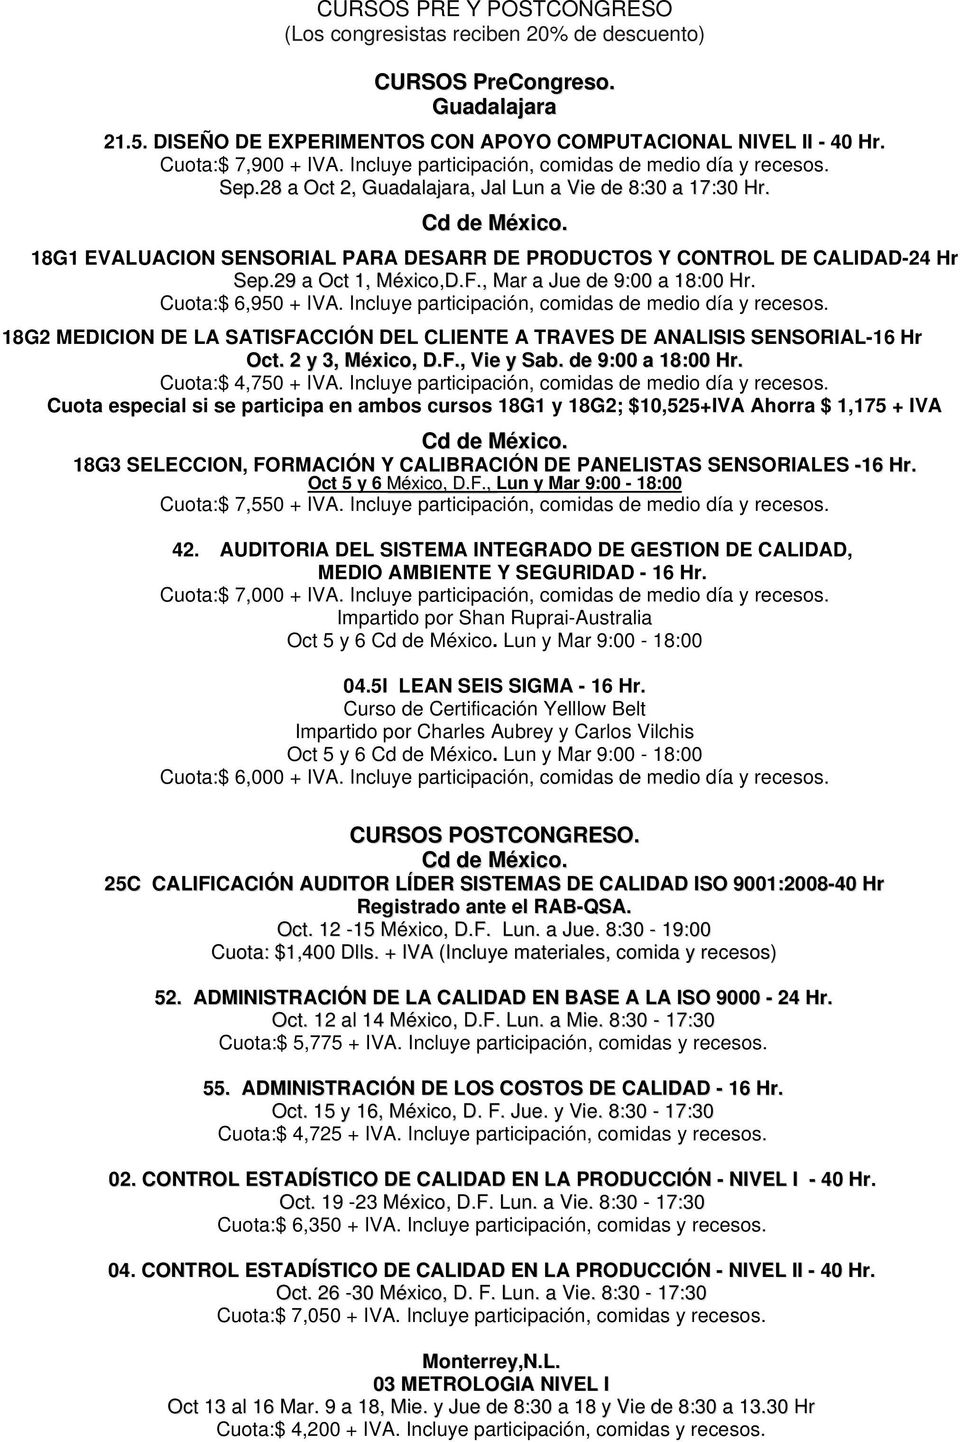 18G1 EVALUACION SENSORIAL PARA DESARR DE PRODUCTOS Y CONTROL DE CALIDAD-24 Hr Sep.29 a Oct 1, México,D.F., Mar a Jue de 9:00 a 18:00 Hr. Cuota:$ 6,950 + IVA.